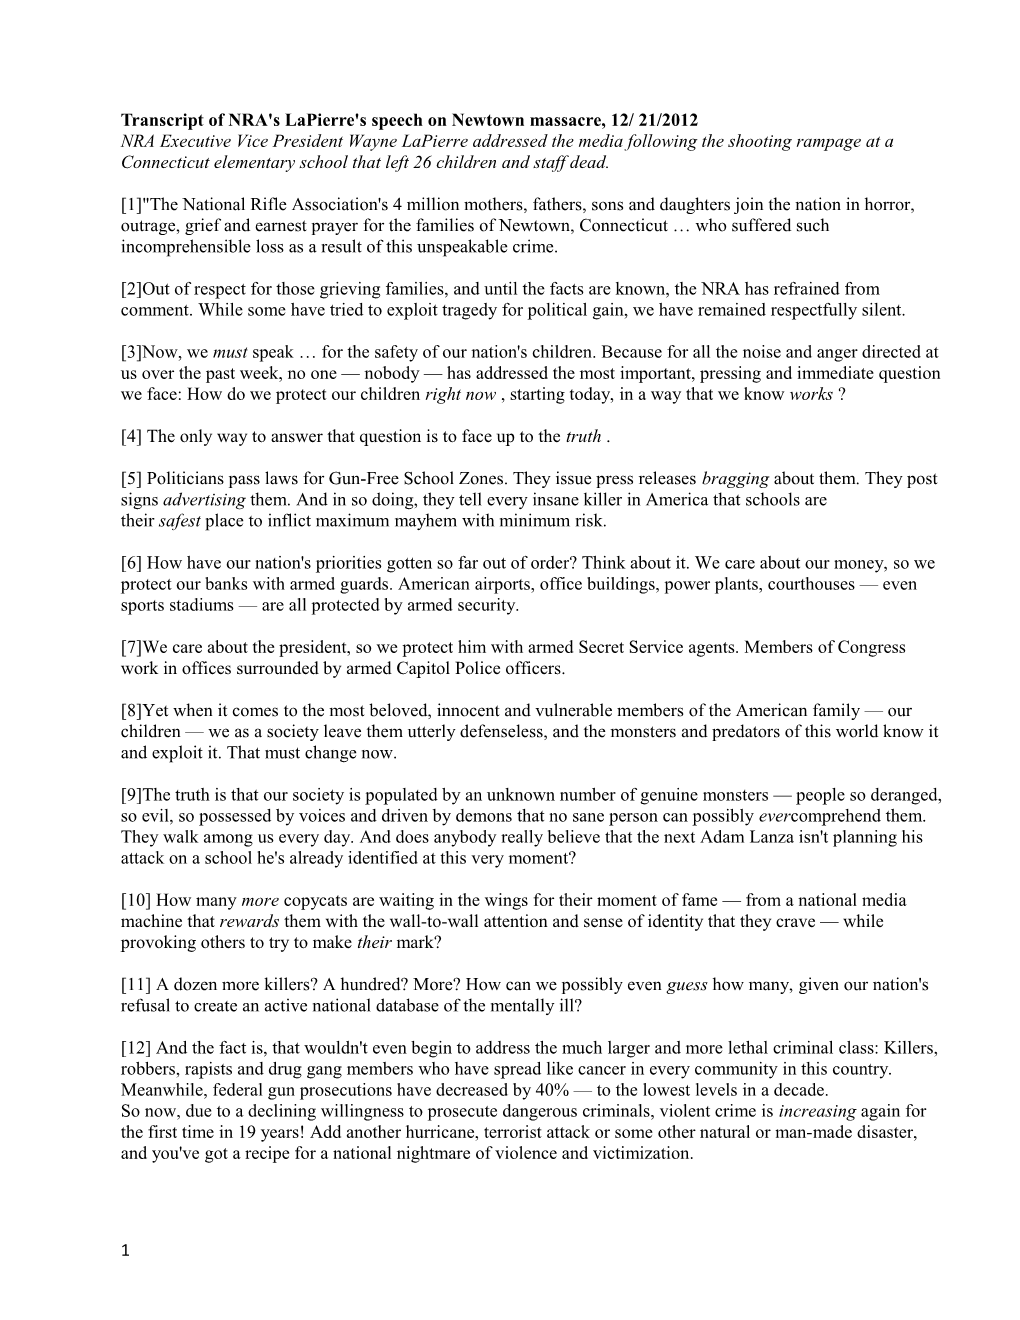 Transcript of NRA's Lapierre's Speech on Newtown Massacre, 12/ 21/2012